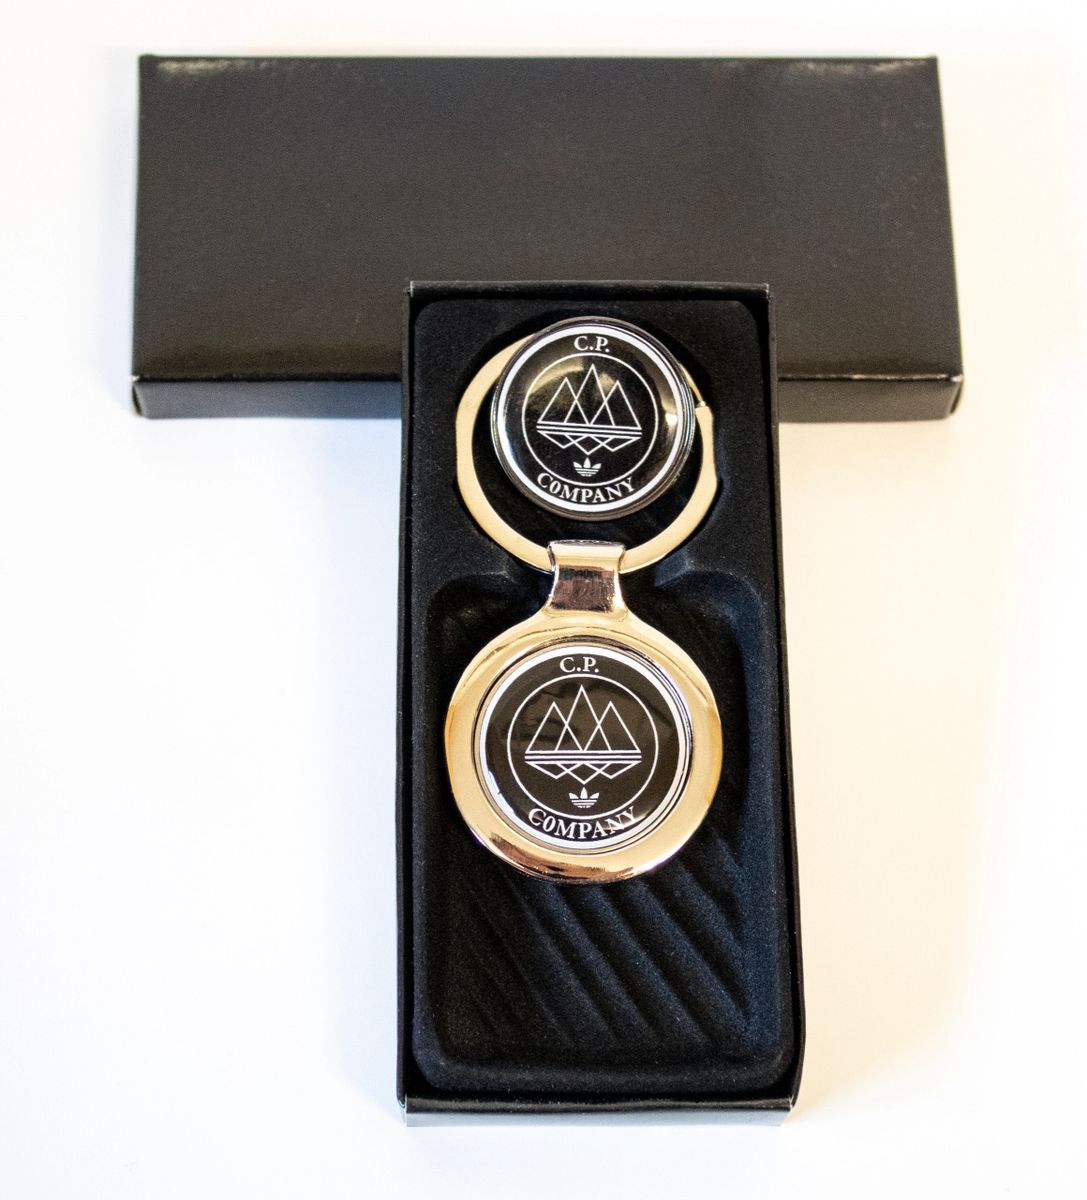 C.P. COMPANY SPEZIAL lapel badge and key ring set